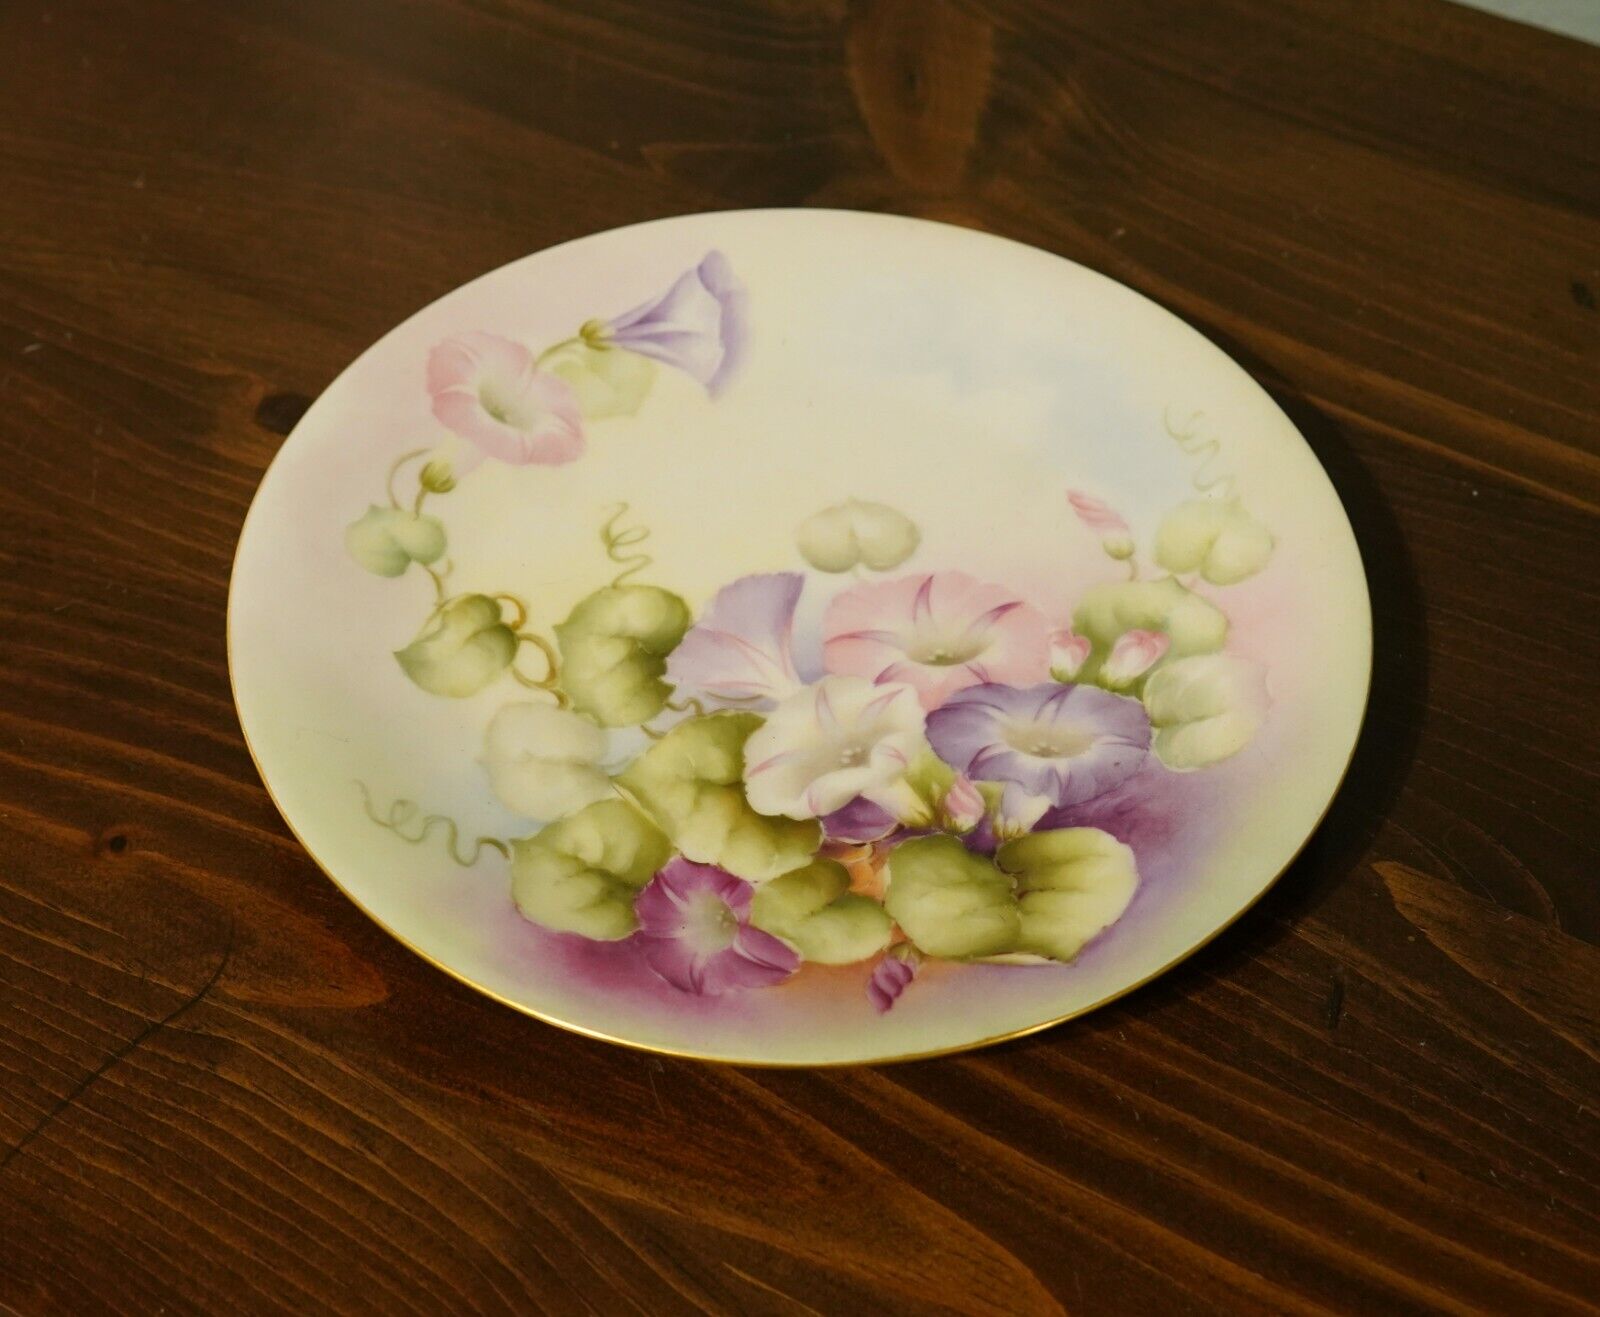 Morning Glory Decorative Plate